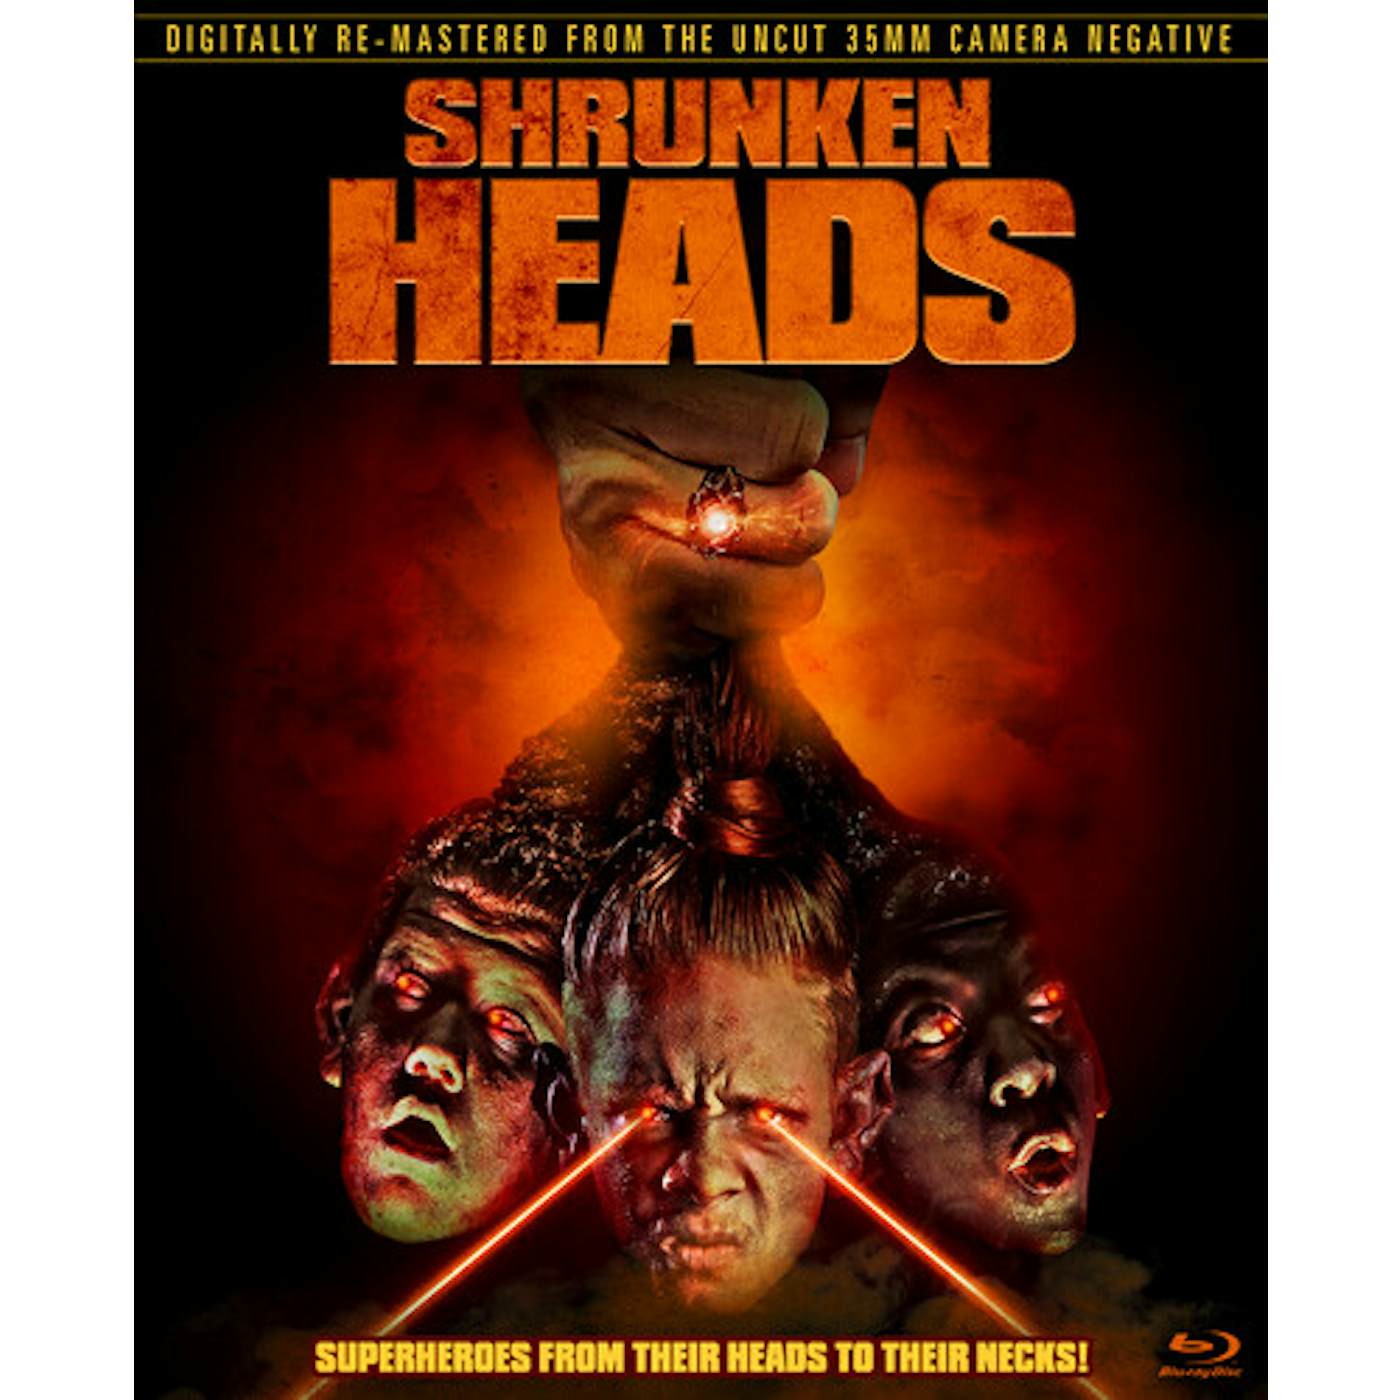 The Shrünken Heads Blu-ray